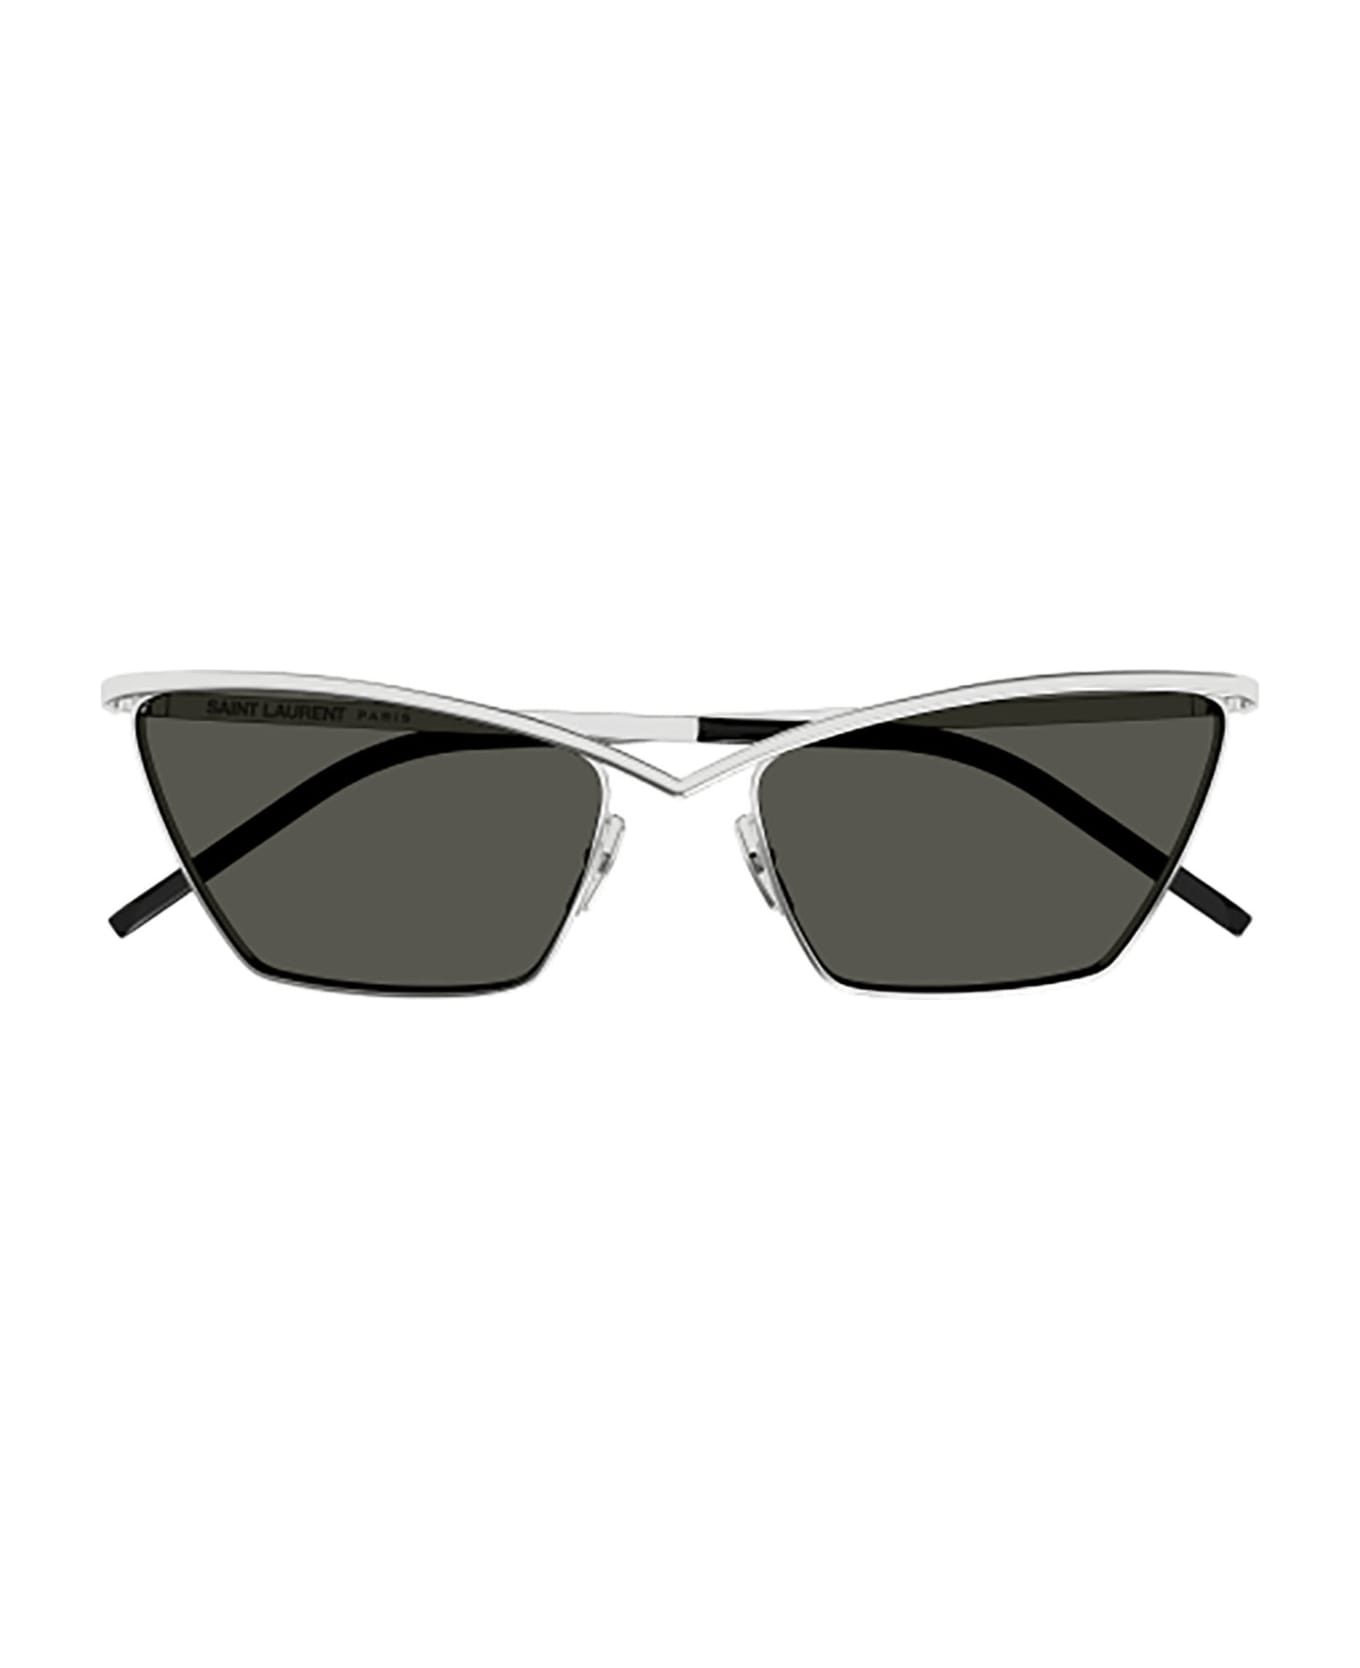 Saint Laurent Eyewear SL 637 Sunglasses - Silver Silver Grey